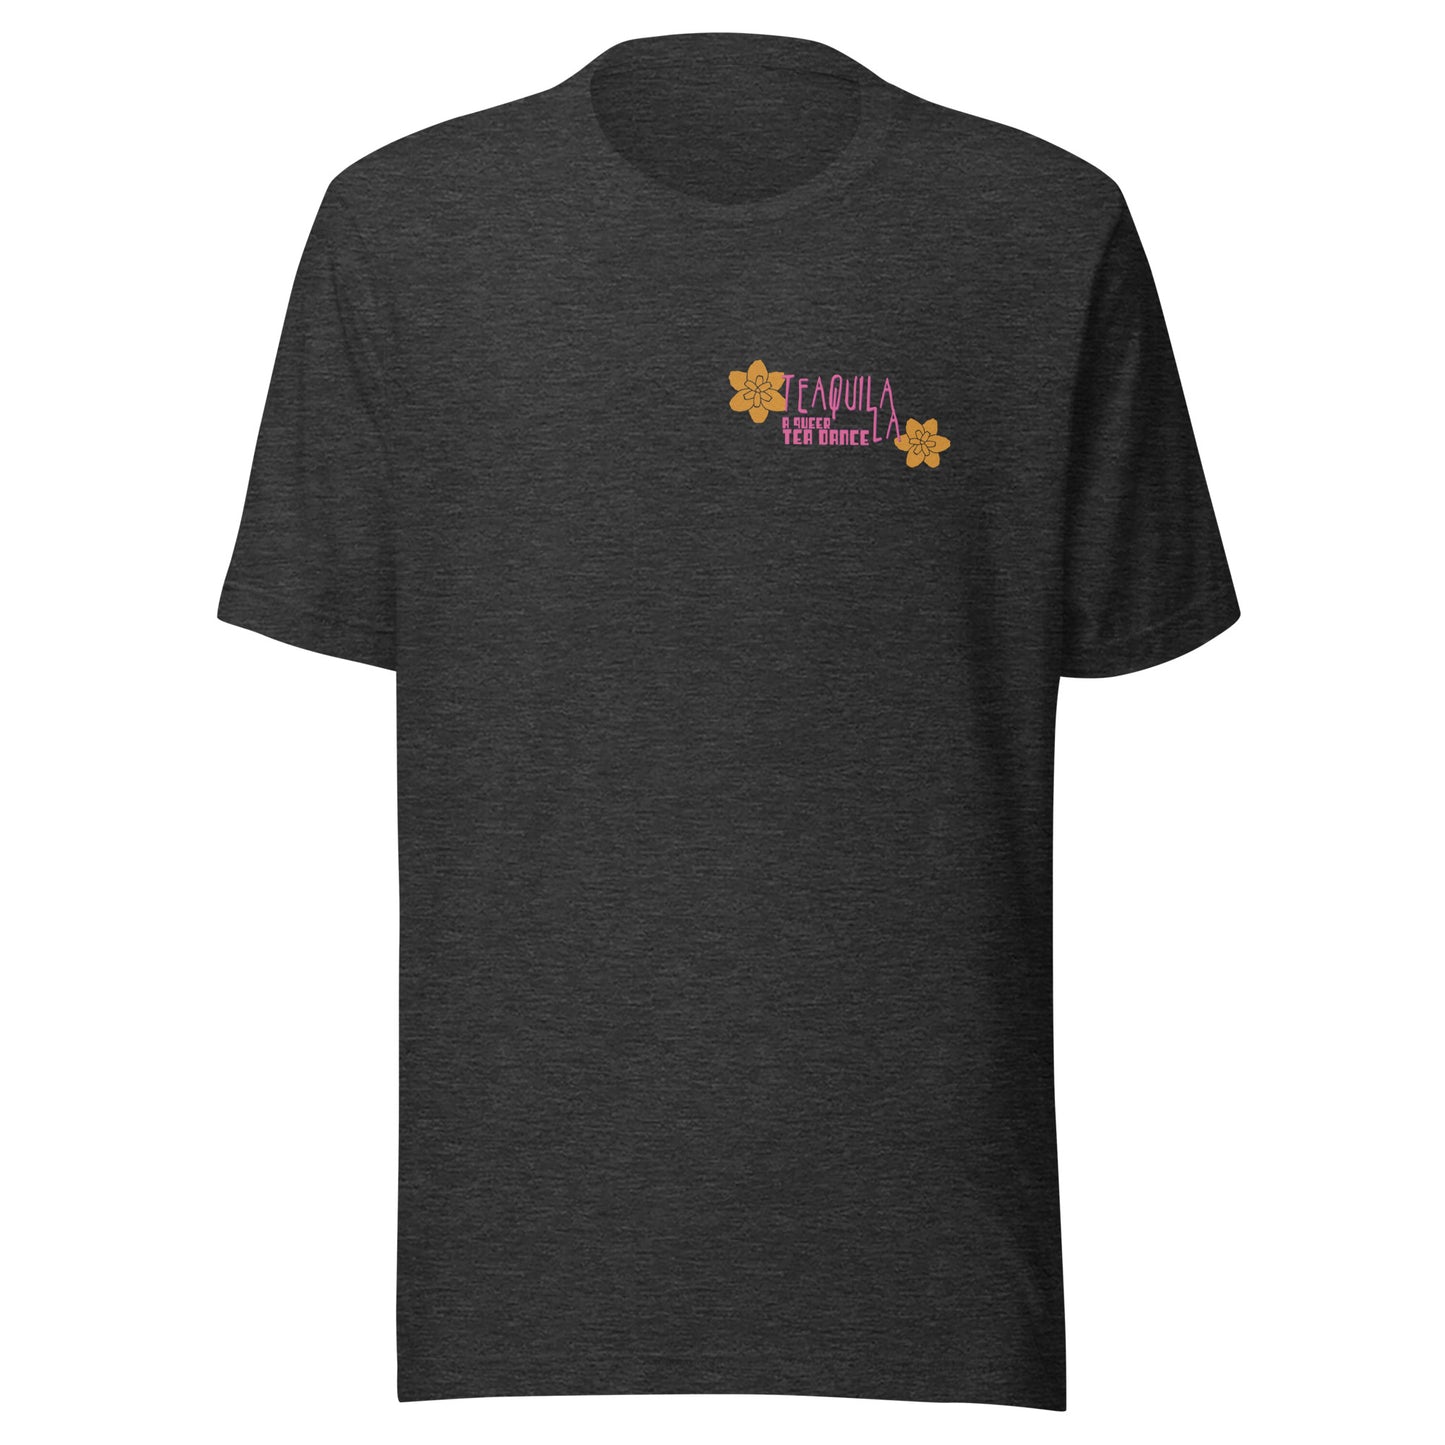 Teaquilala T-shirt - Unisex (5 color options)